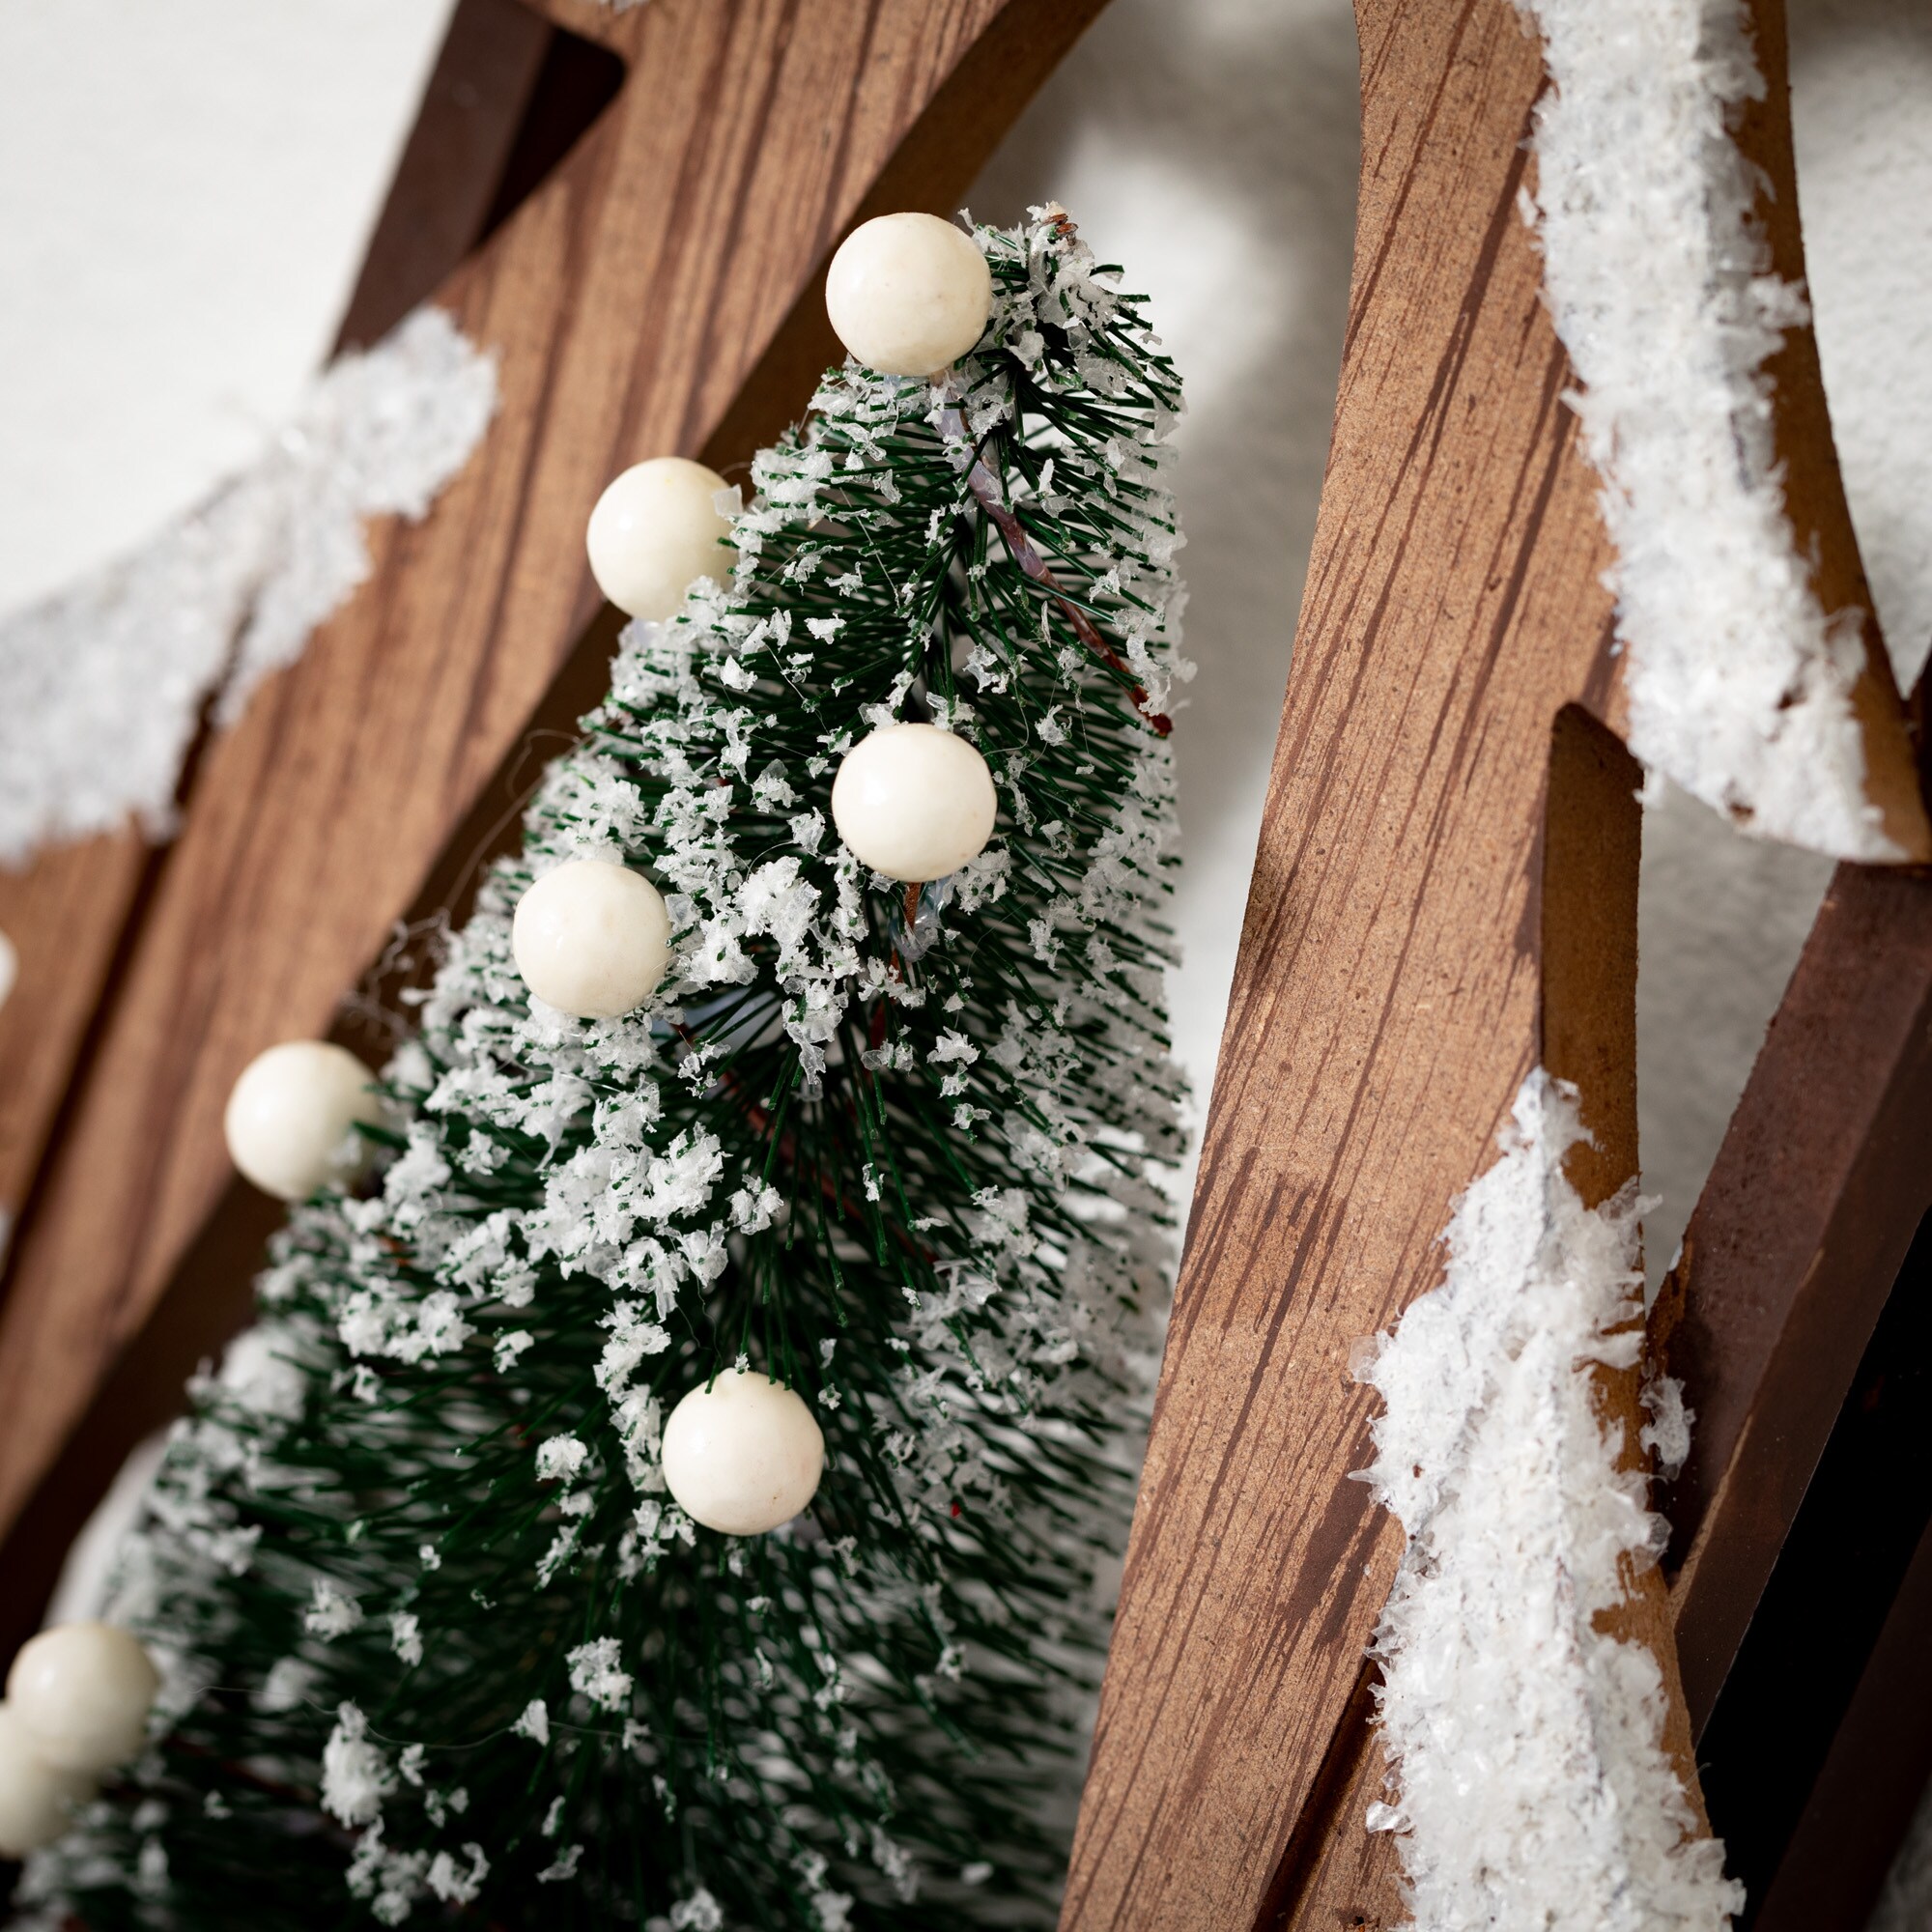 Sullivans 6.25 in. Wood Snowflake Ornament - Set of 3, White Christmas Ornaments